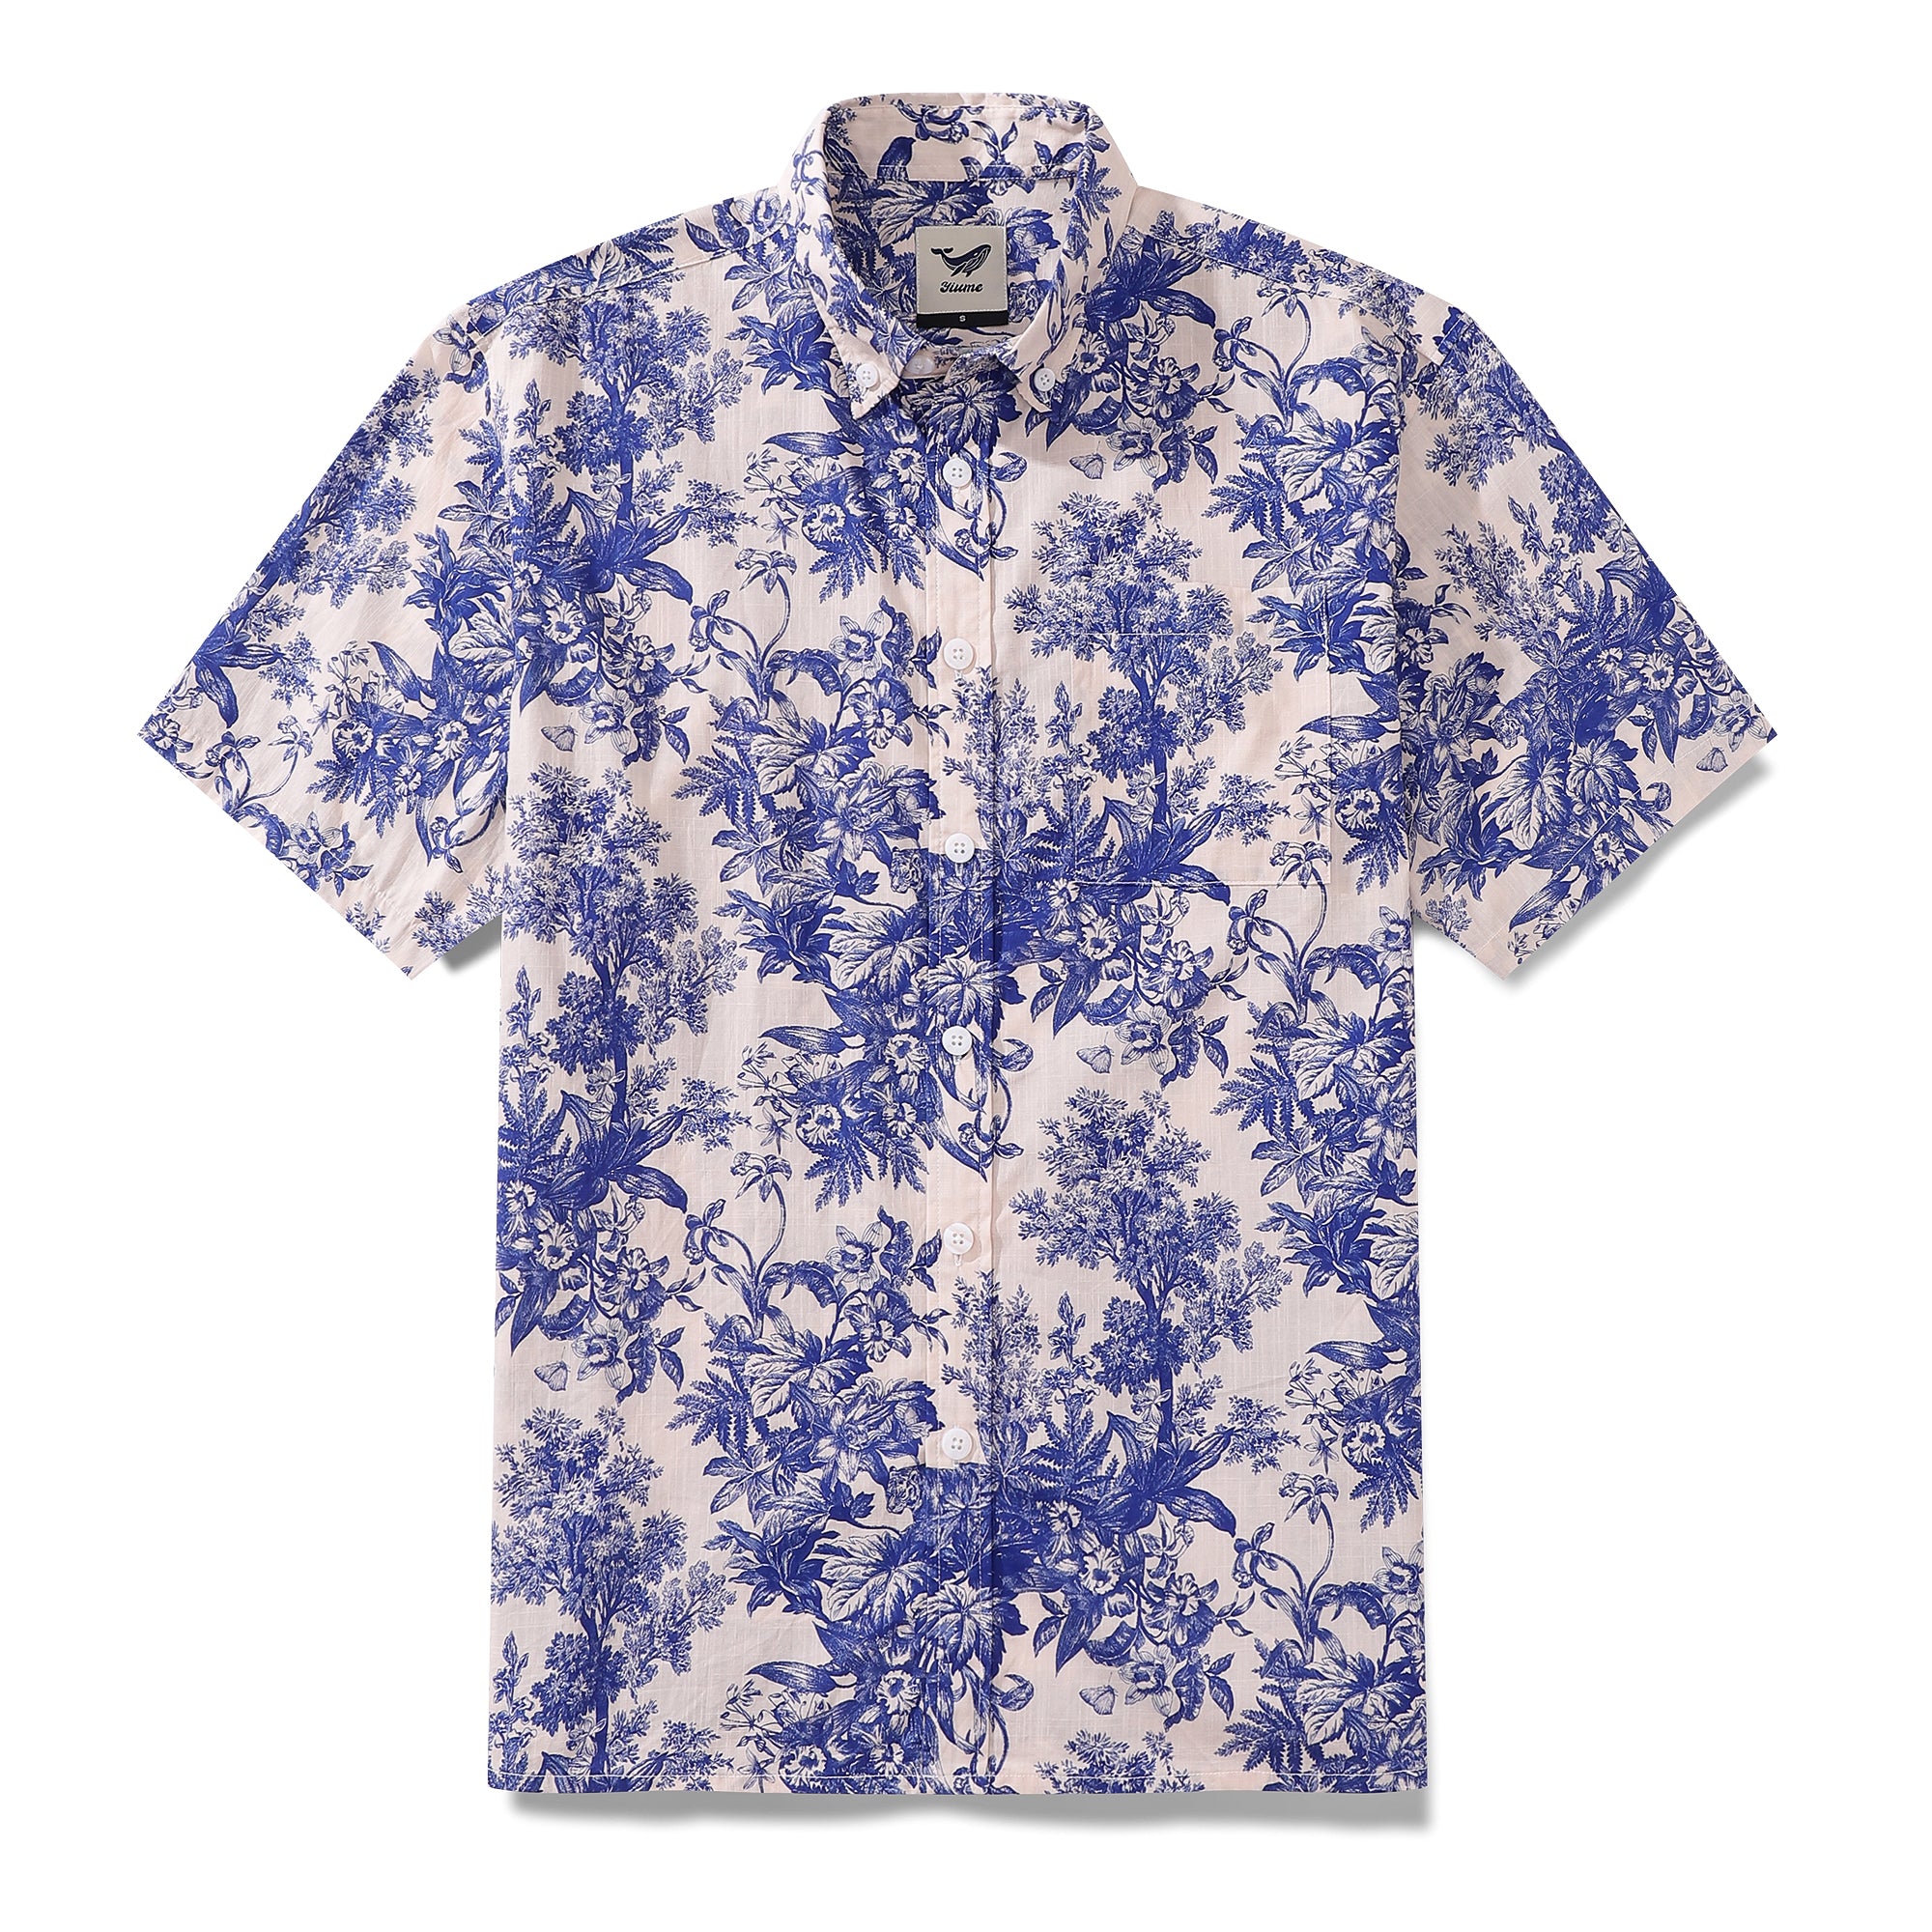 Men's Hawaiian Shirt Rural Scenery Print 1920s Vintage Short Sleeve Aloha Shirt